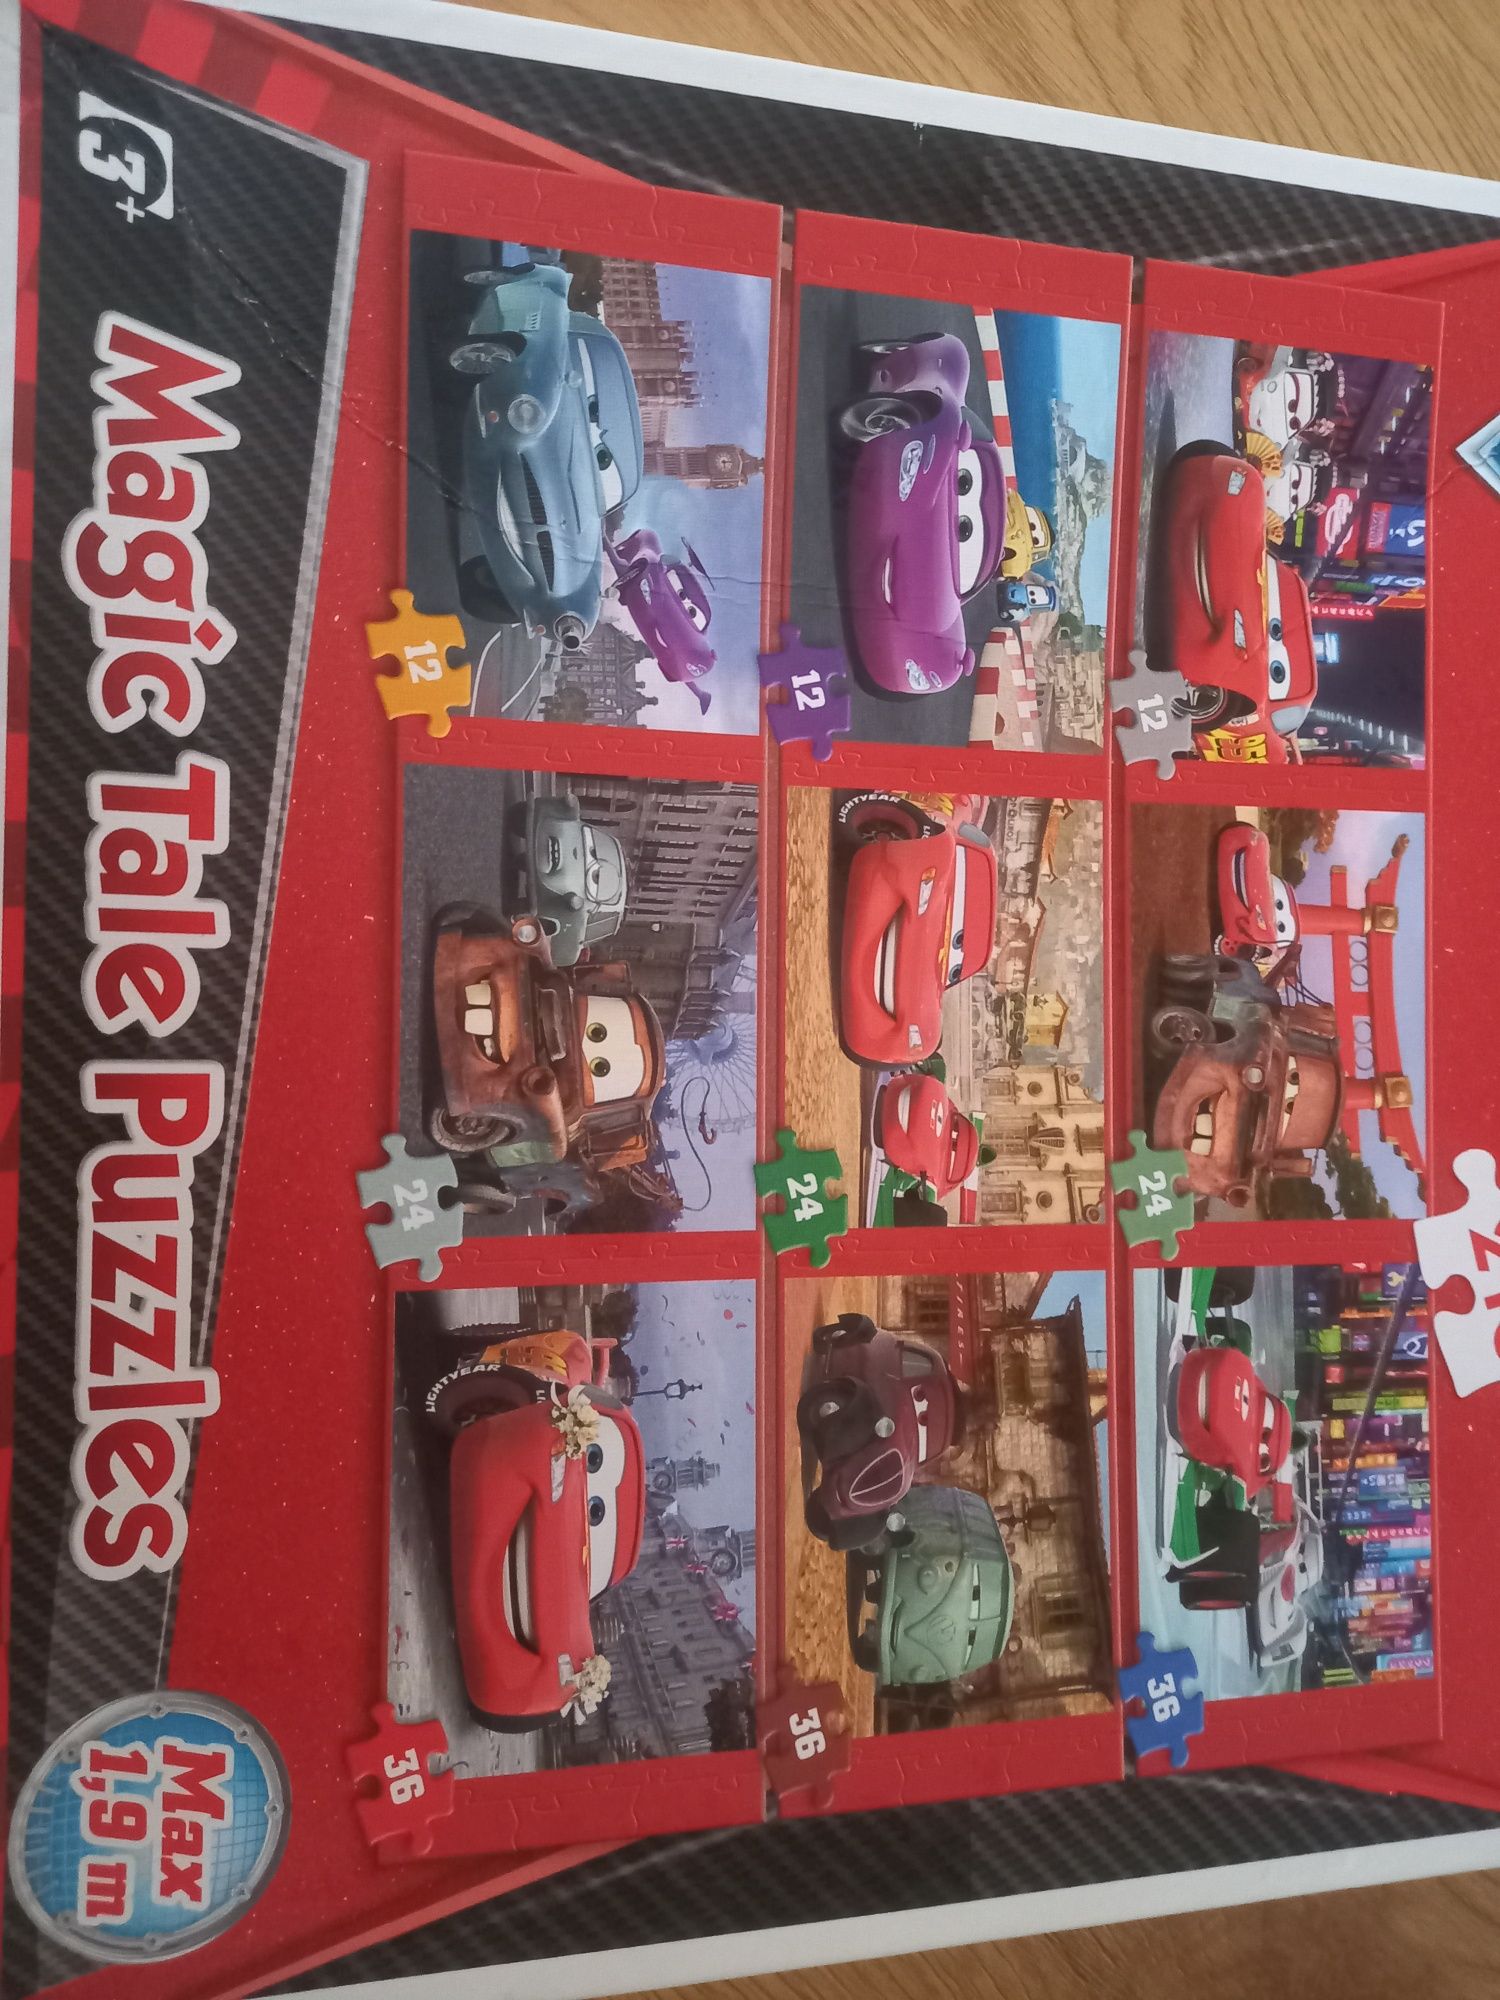 Puzzle cars 9 obrazków, 2 pudełka mini puzzle